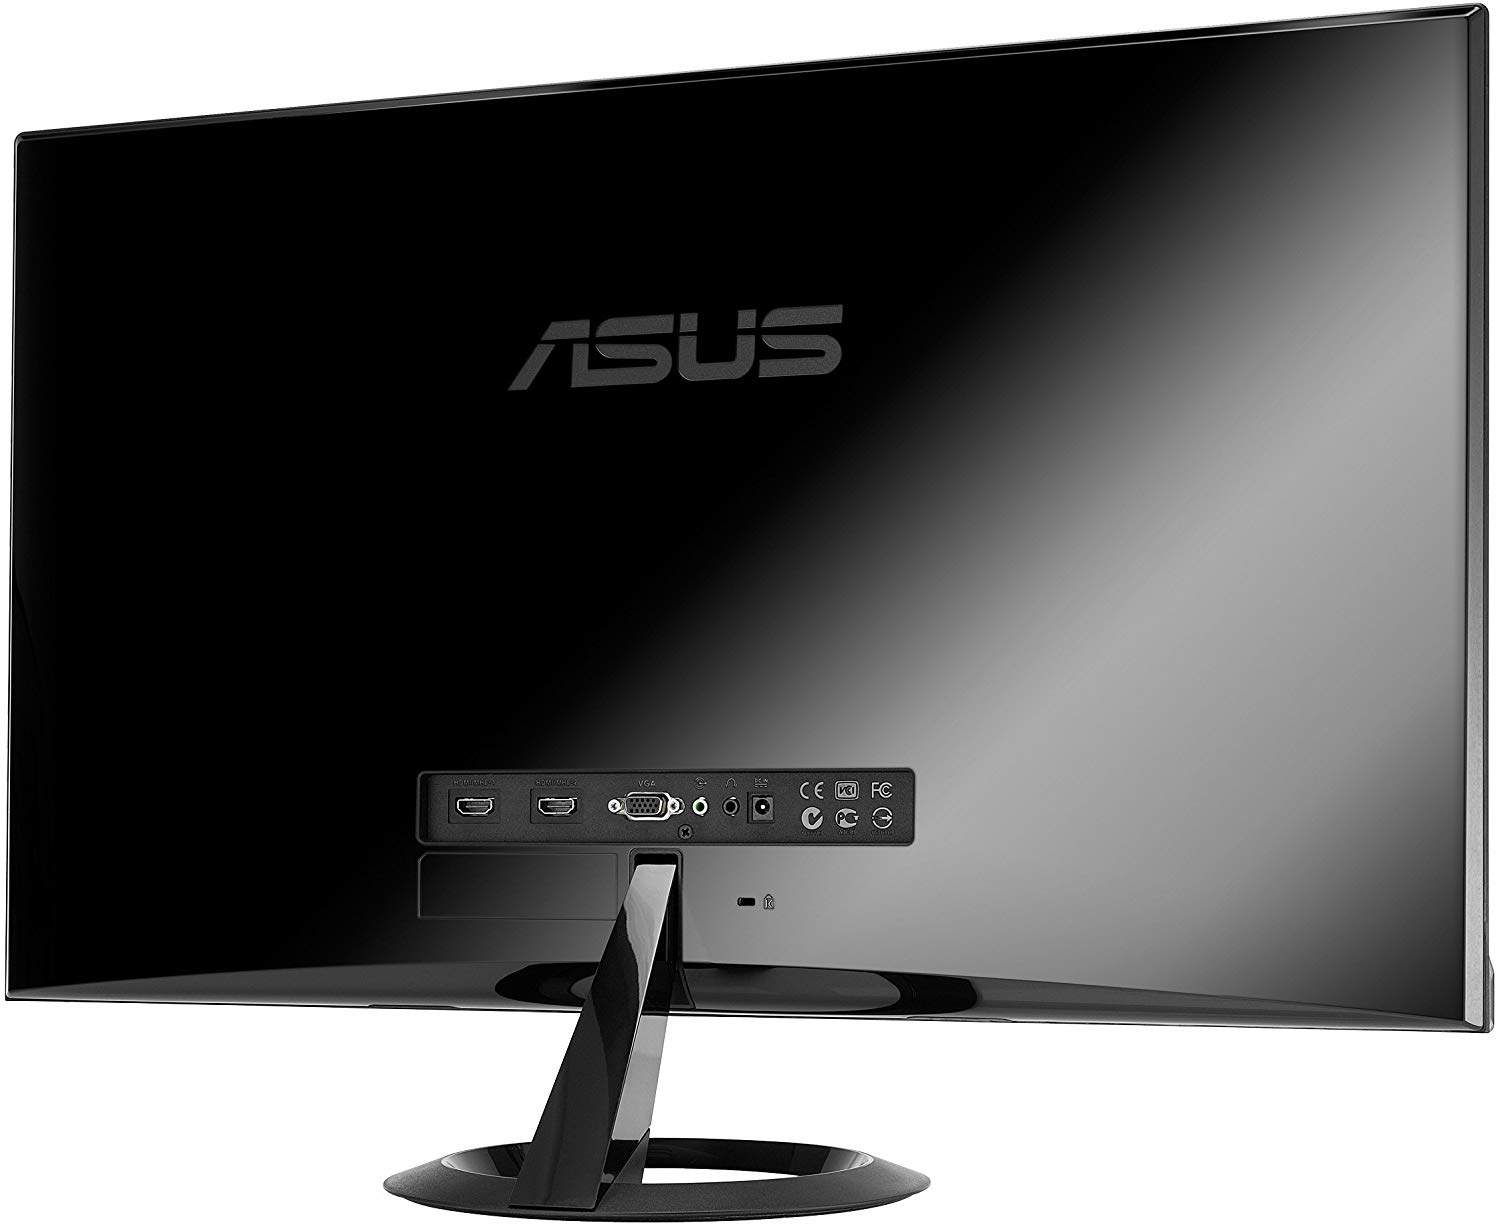 Asus VX279H-W 27 inch Widescreen LED Monitor > Monitors > ADVANTI